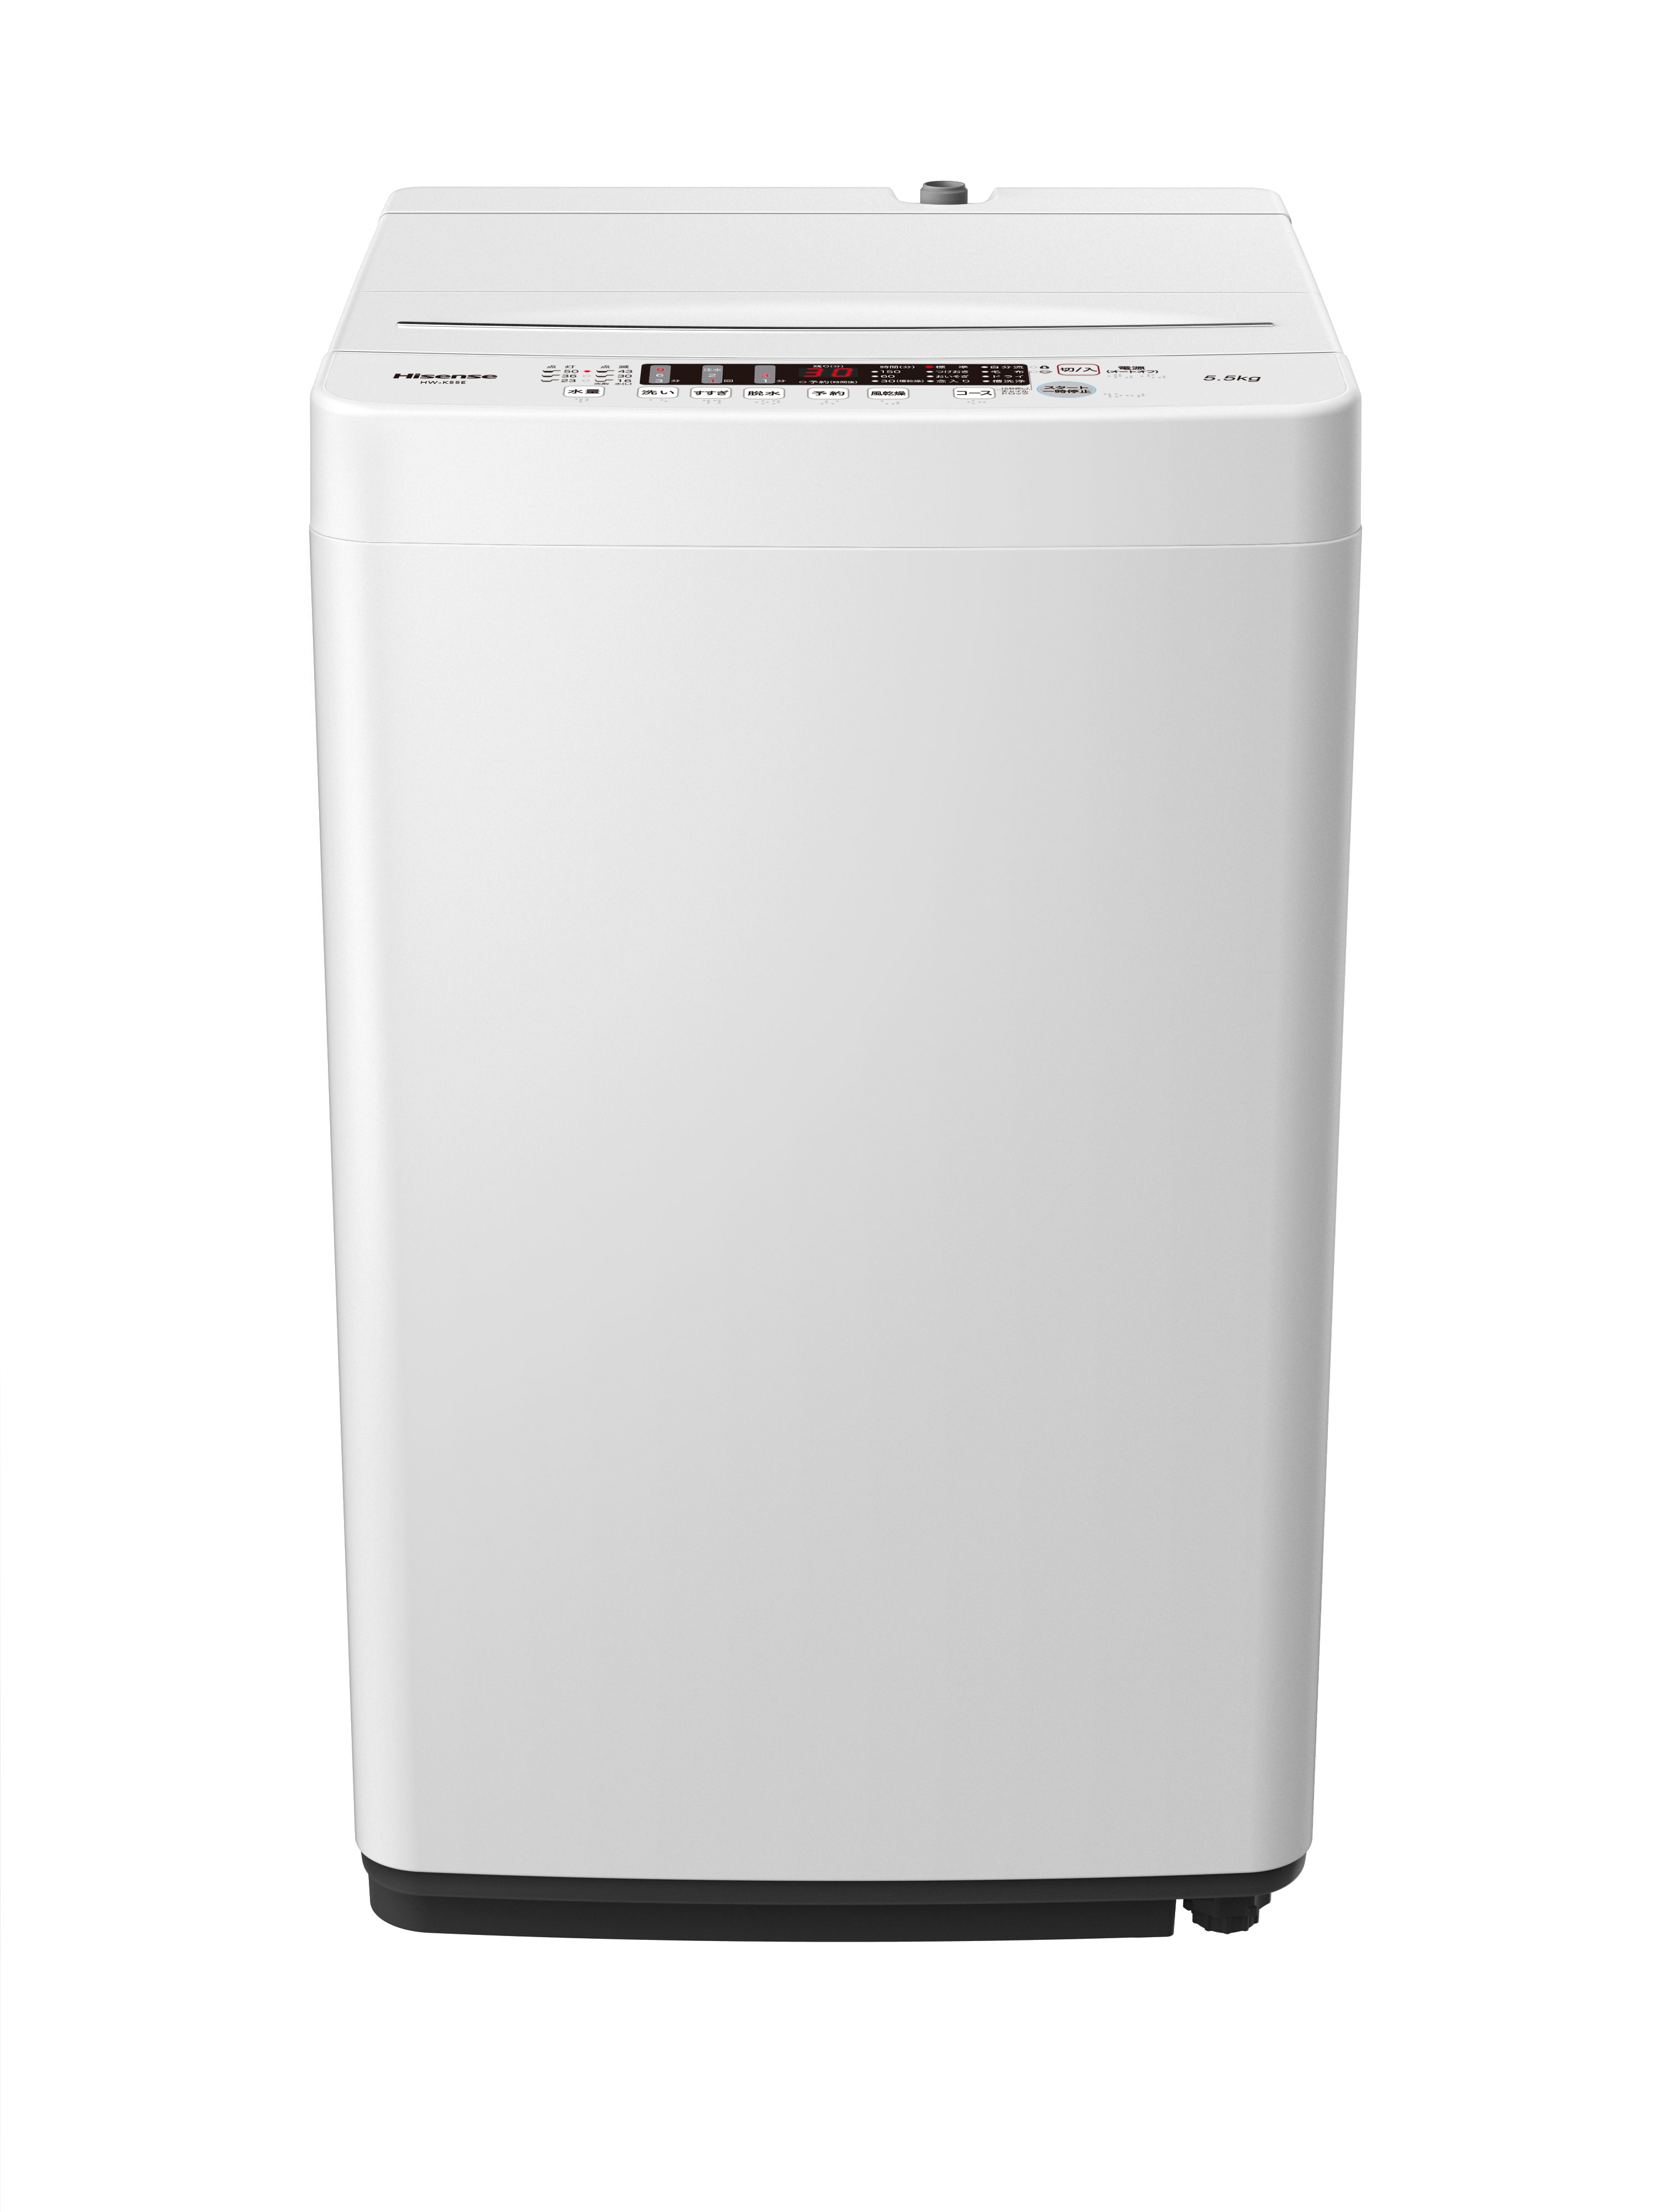 HISENSE HW-K55E WHITE 全自動洗濯機 分解洗浄済み洗濯機